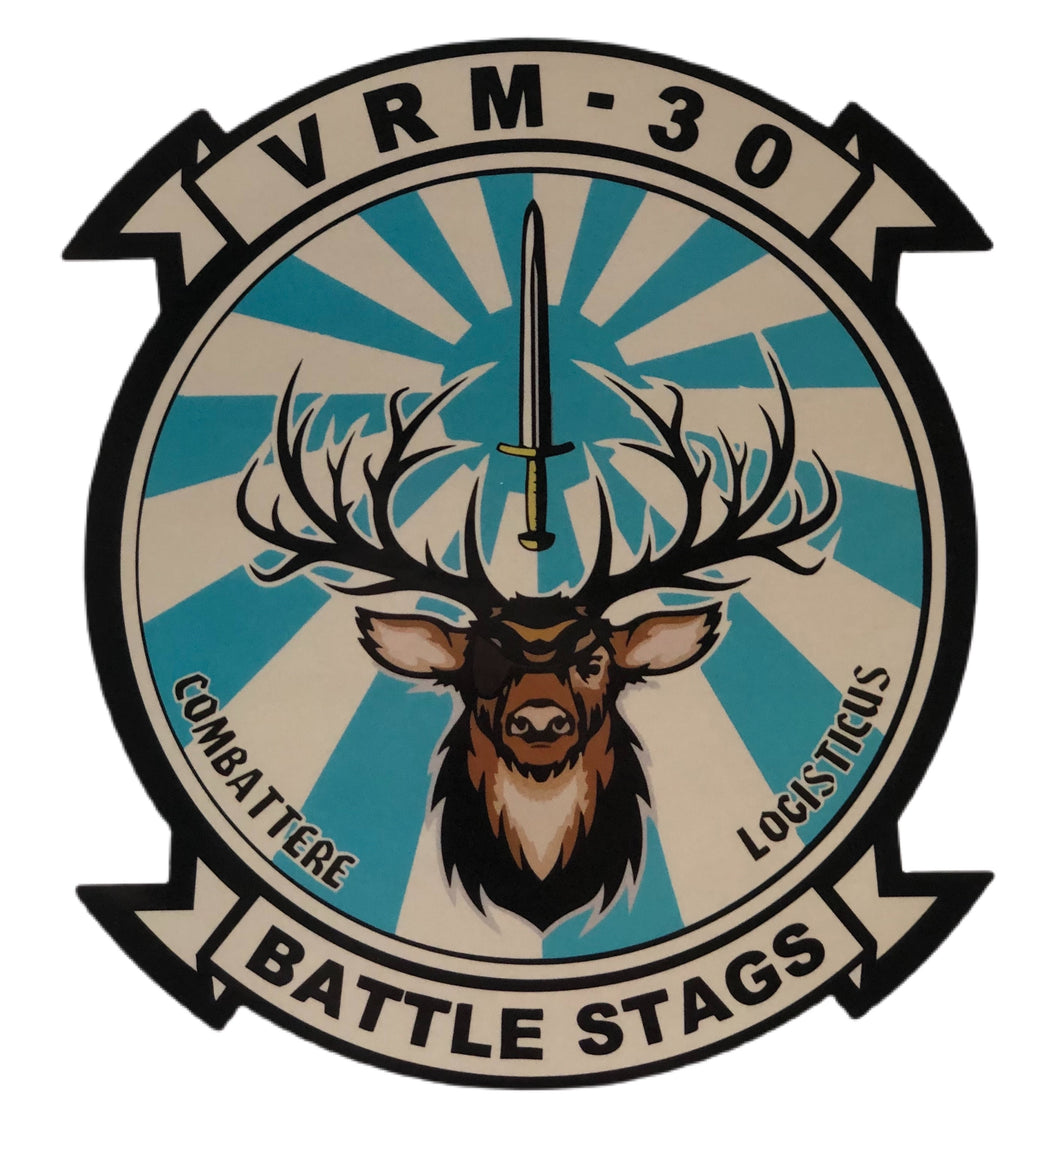 VRM-30 Battle Stag Sticker/Slap/Zap